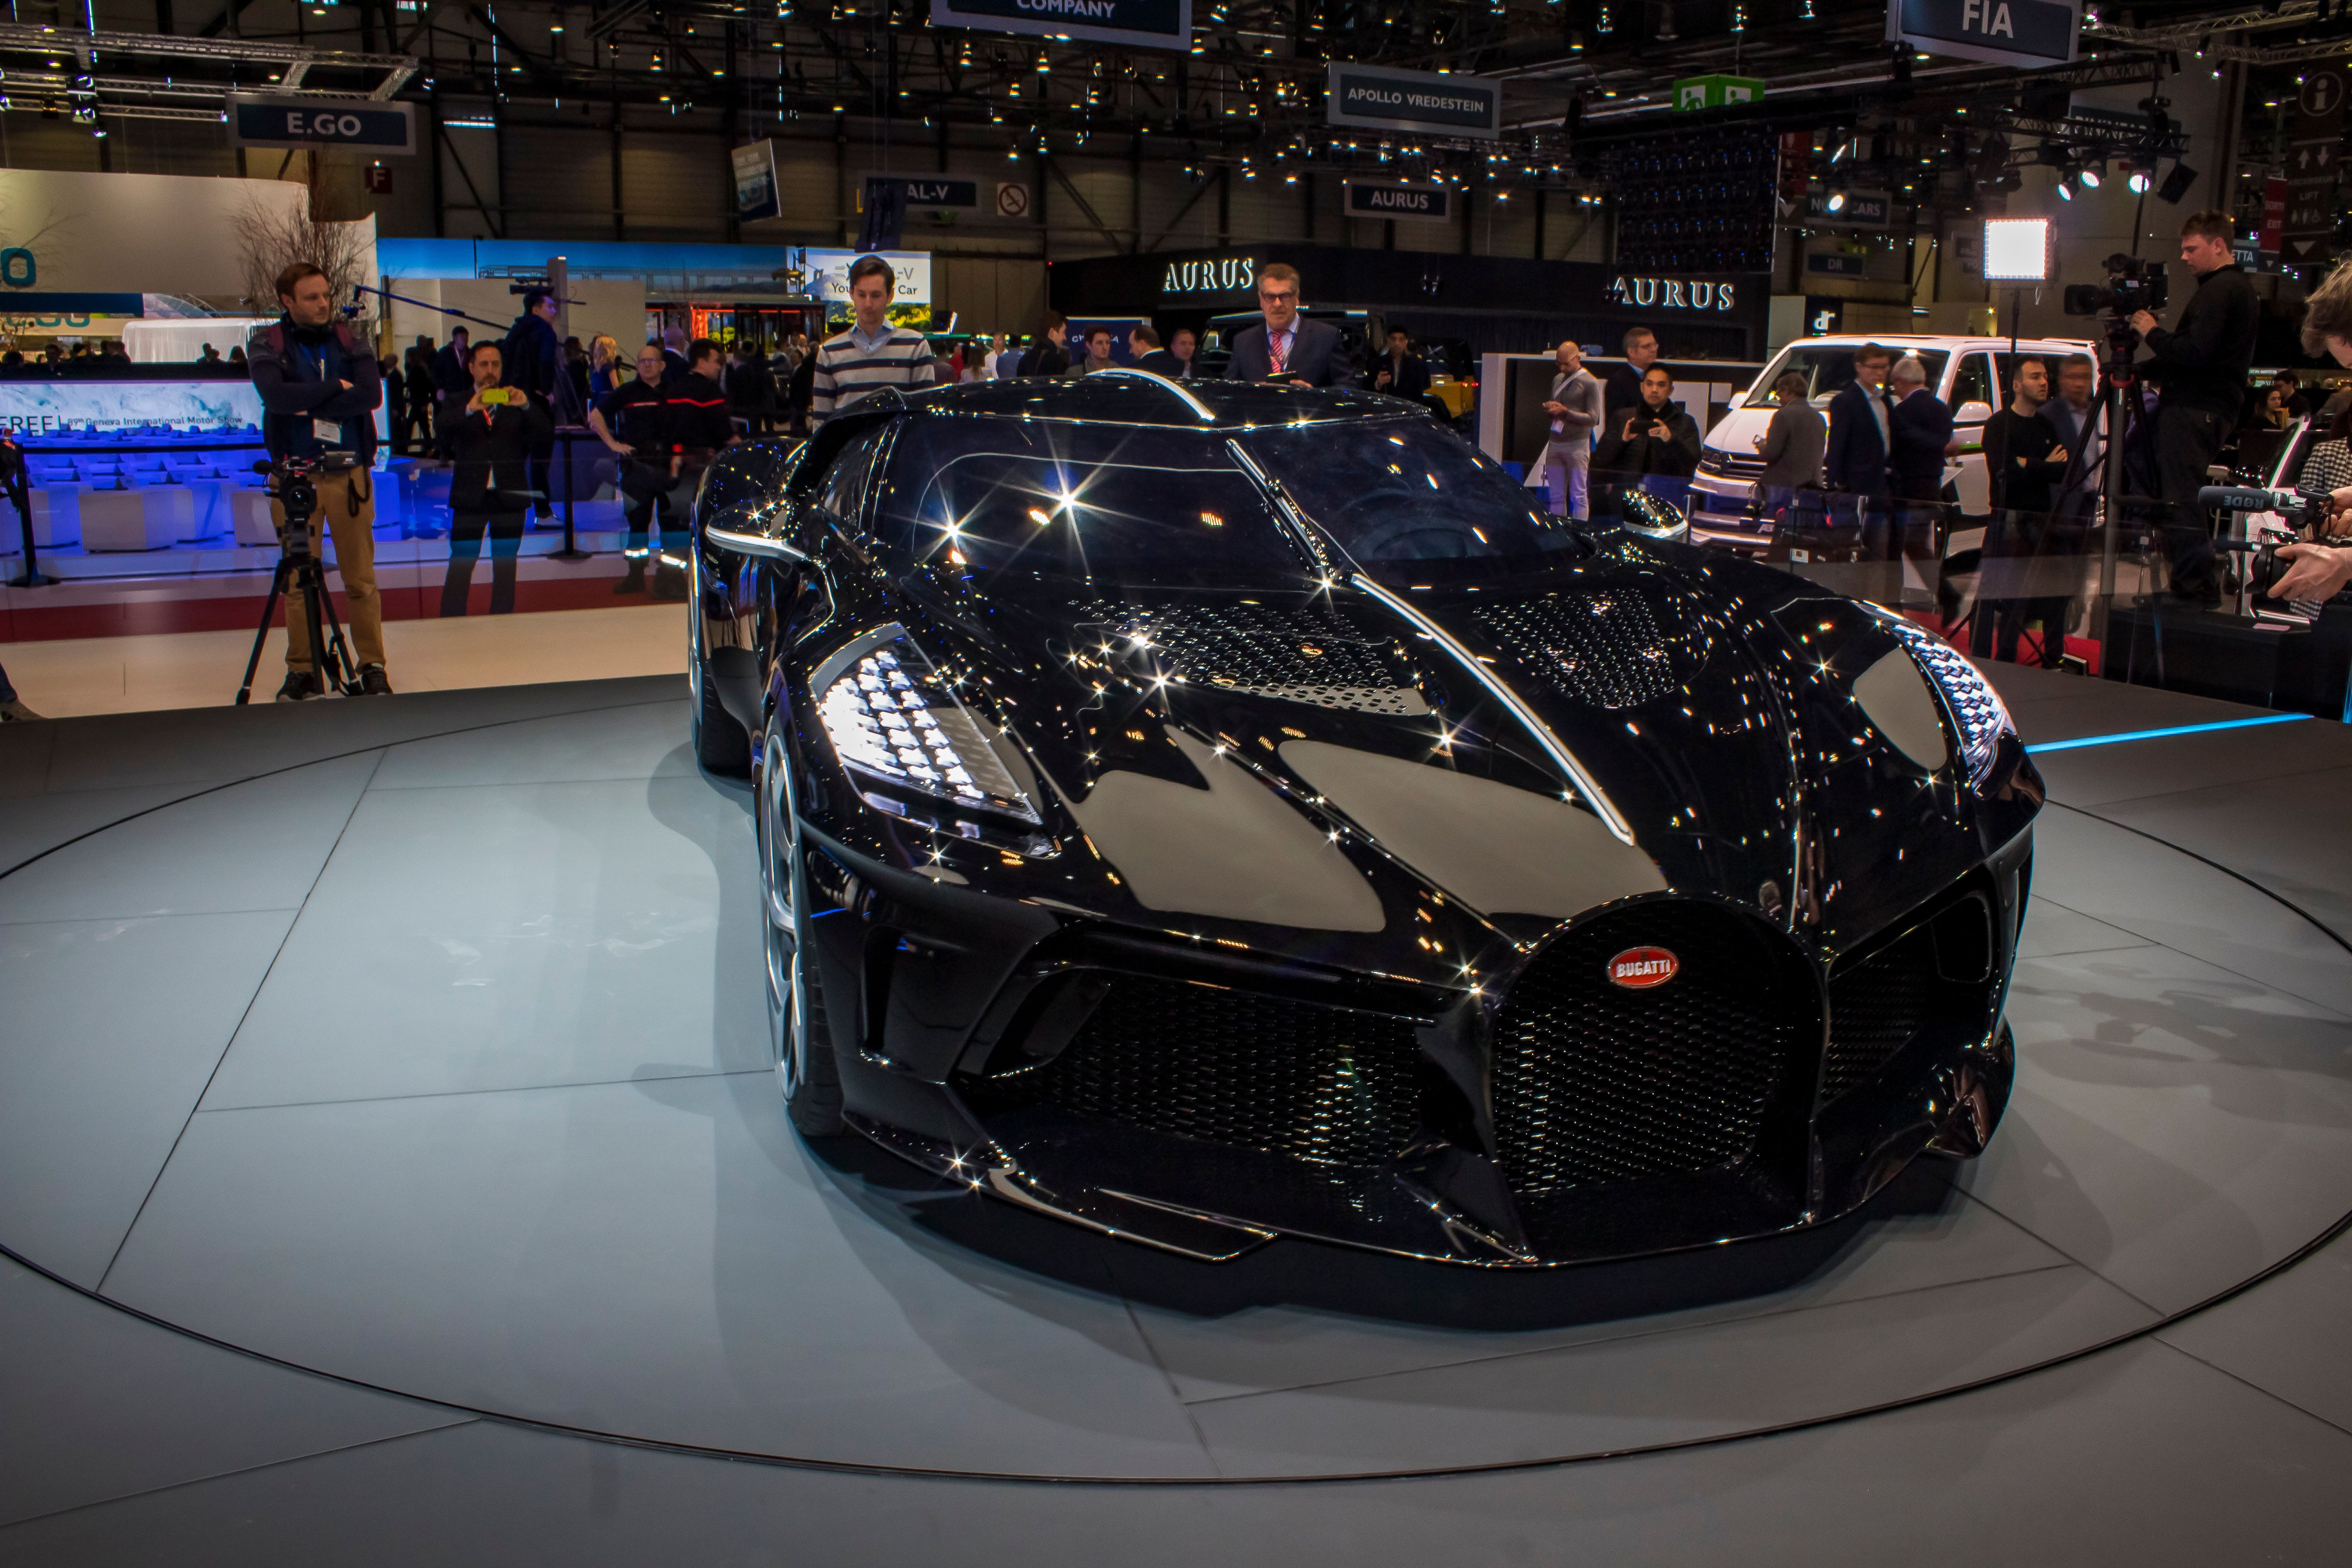 2021 Bugatti Just Put The La Voiture Noire On Christmas Display In Molsheim